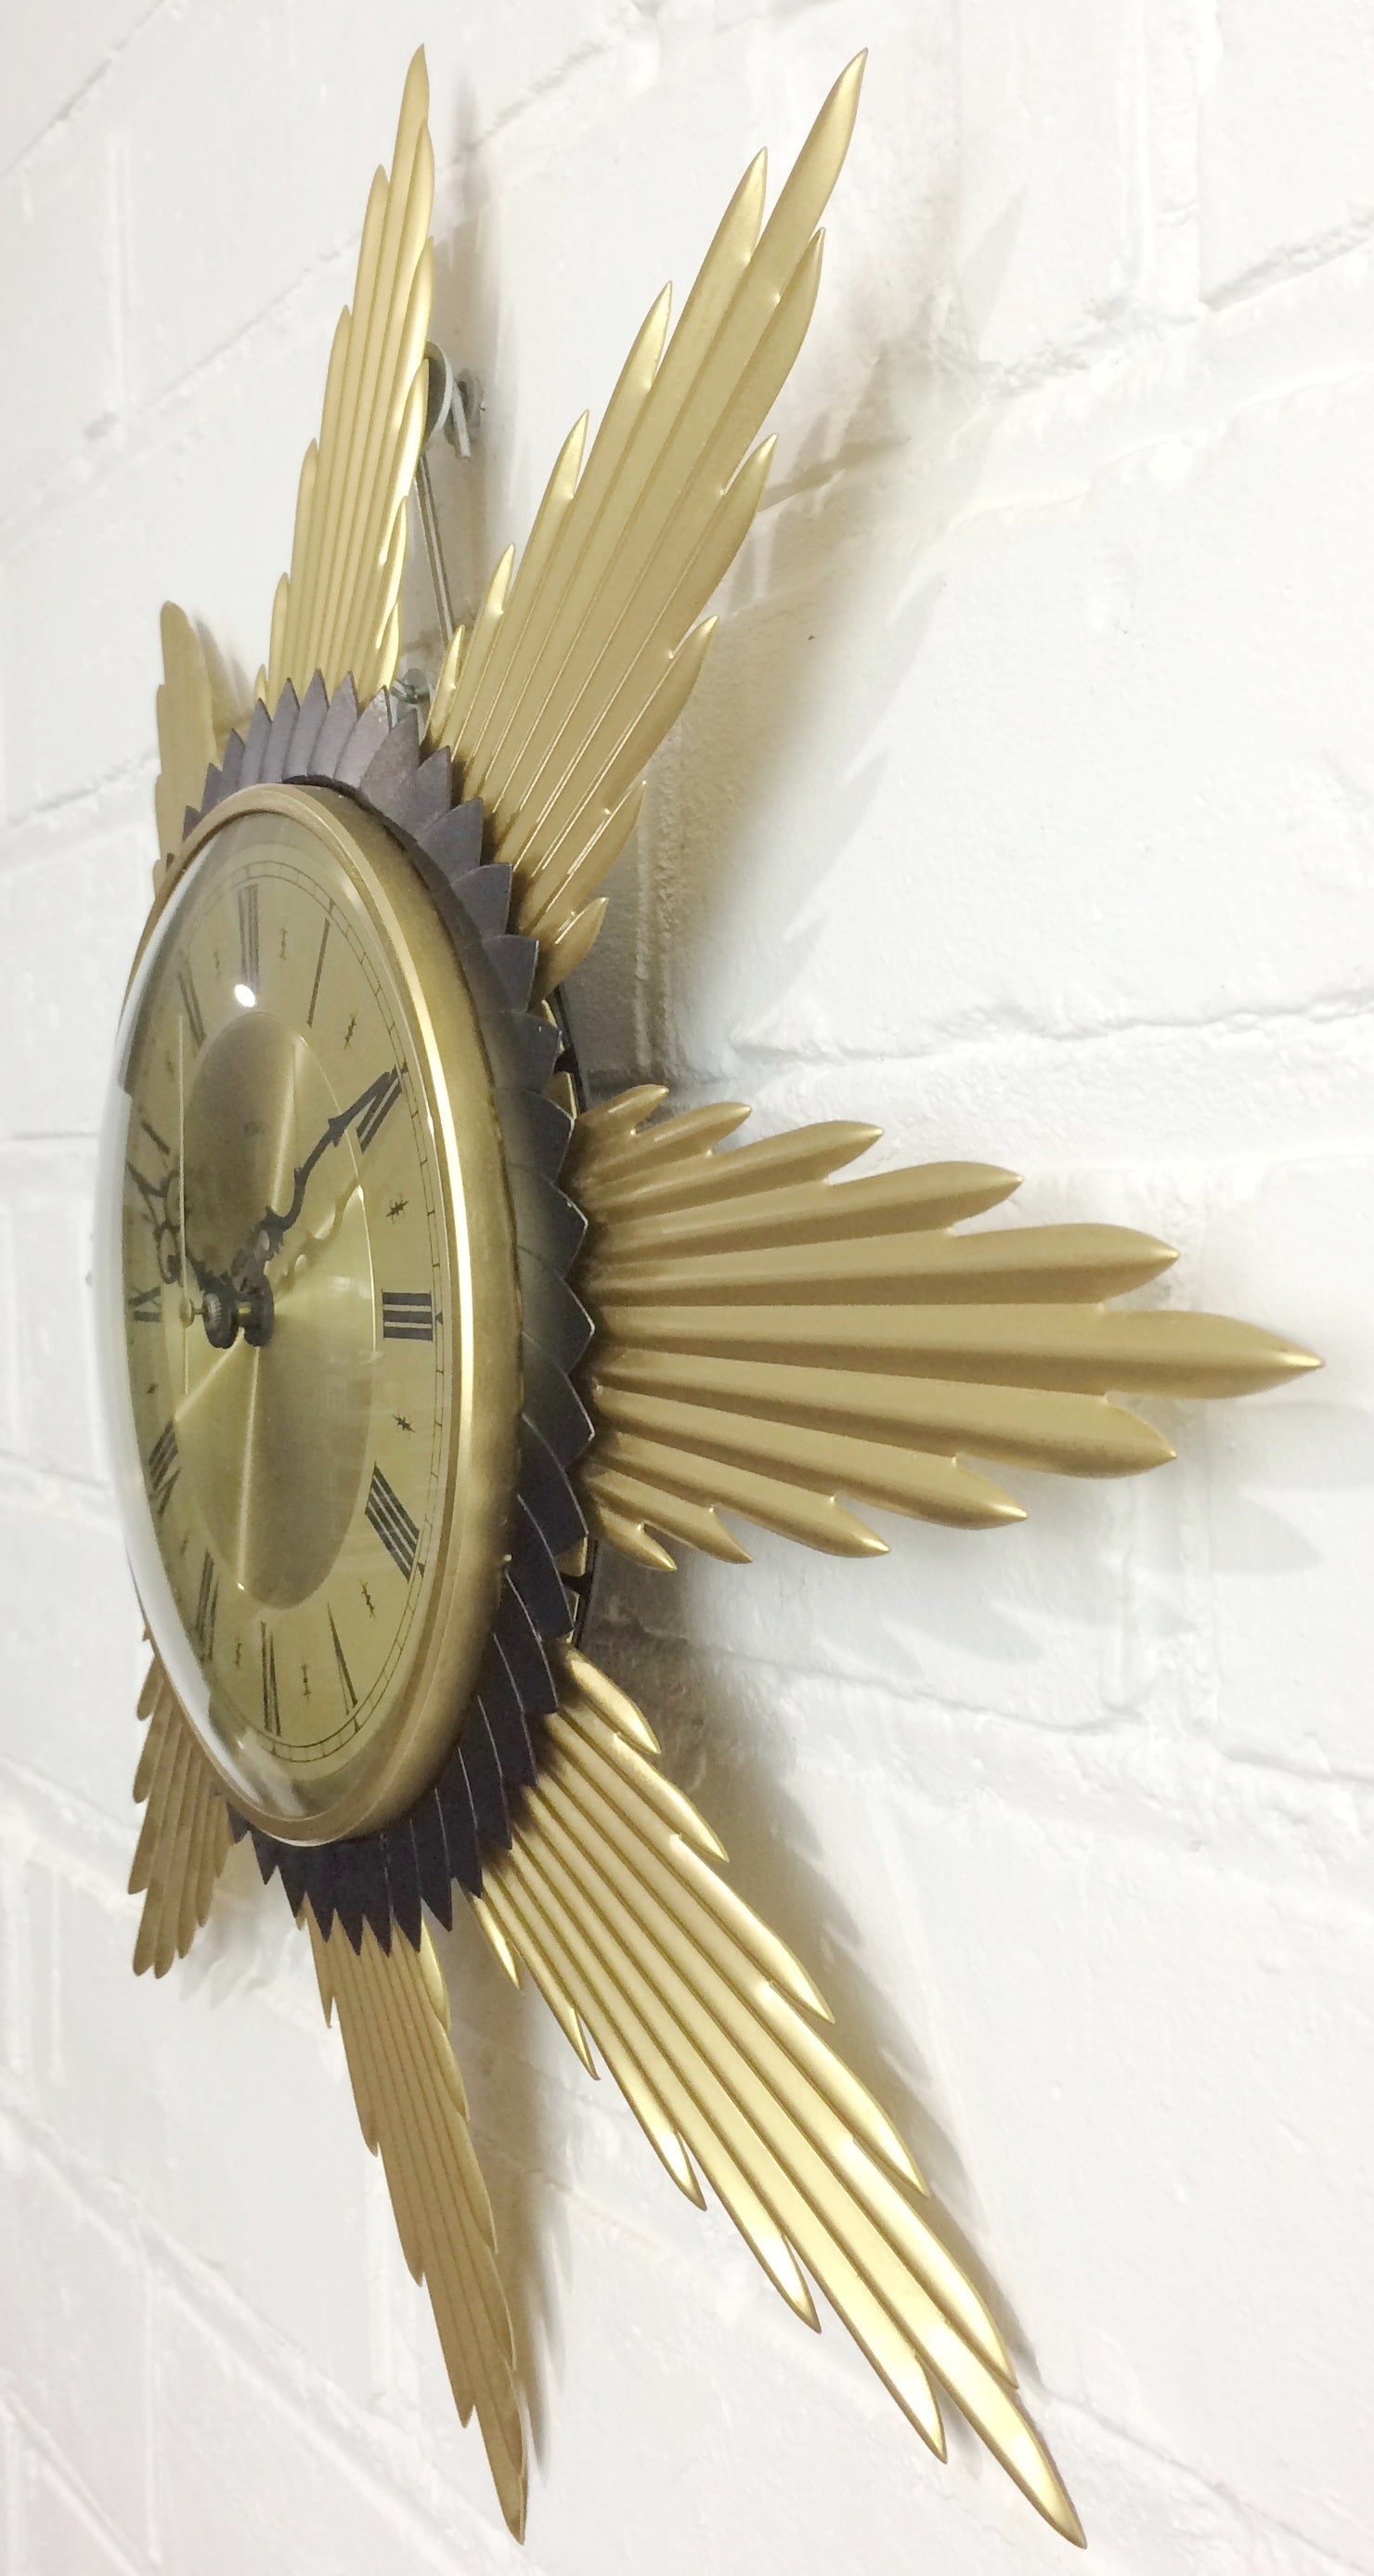 Vintage Metamec Starburst Battery Wall Clock | Adelaide Clocks